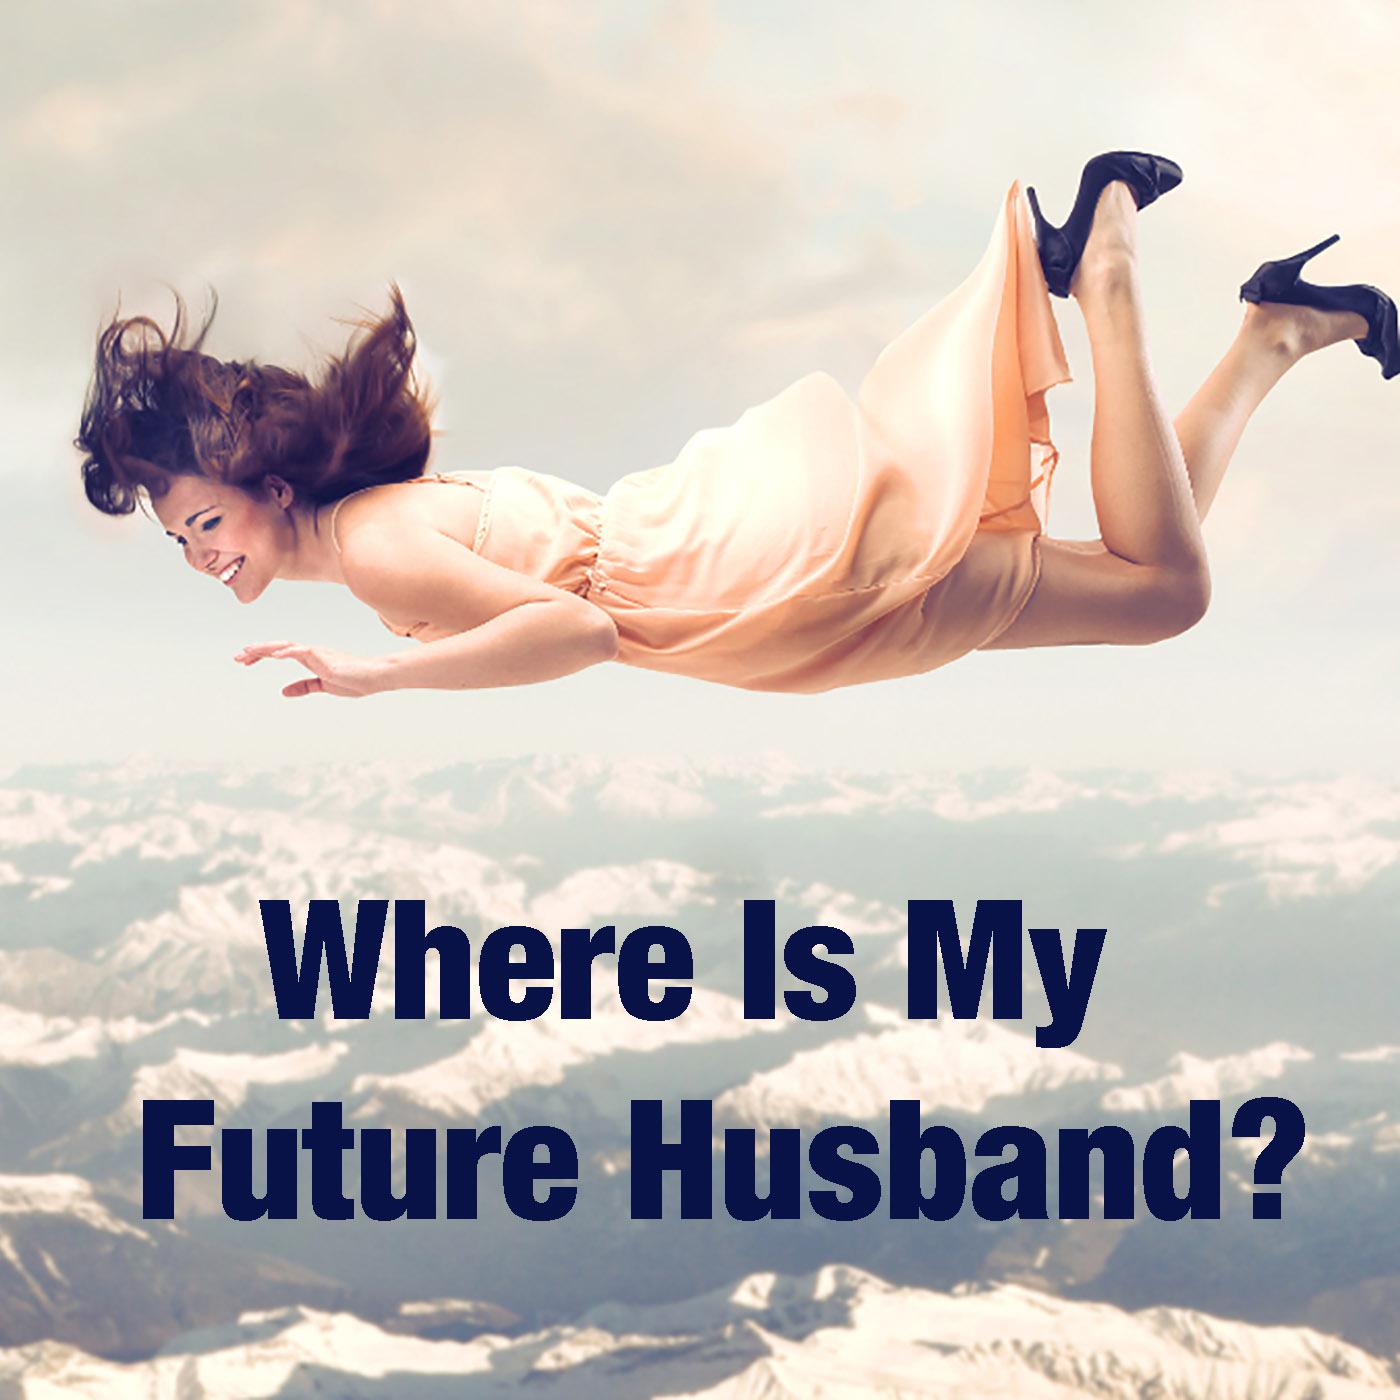 Where Is My Future Husband?